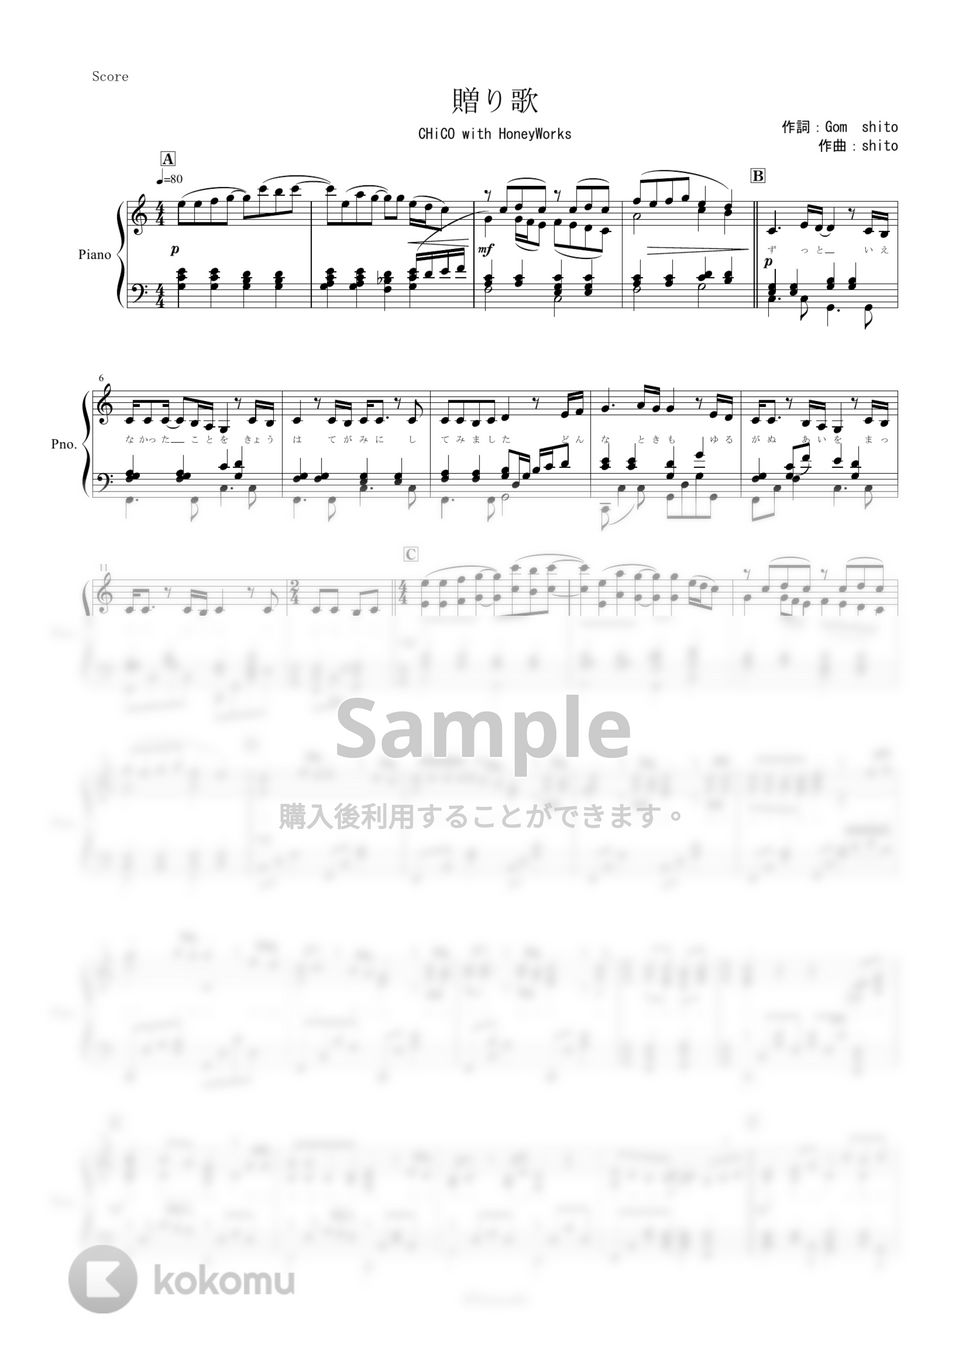 CHiCO with HoneyWorks - 贈り歌 (ピアノ楽譜/上級/全４ページ) by yoshi